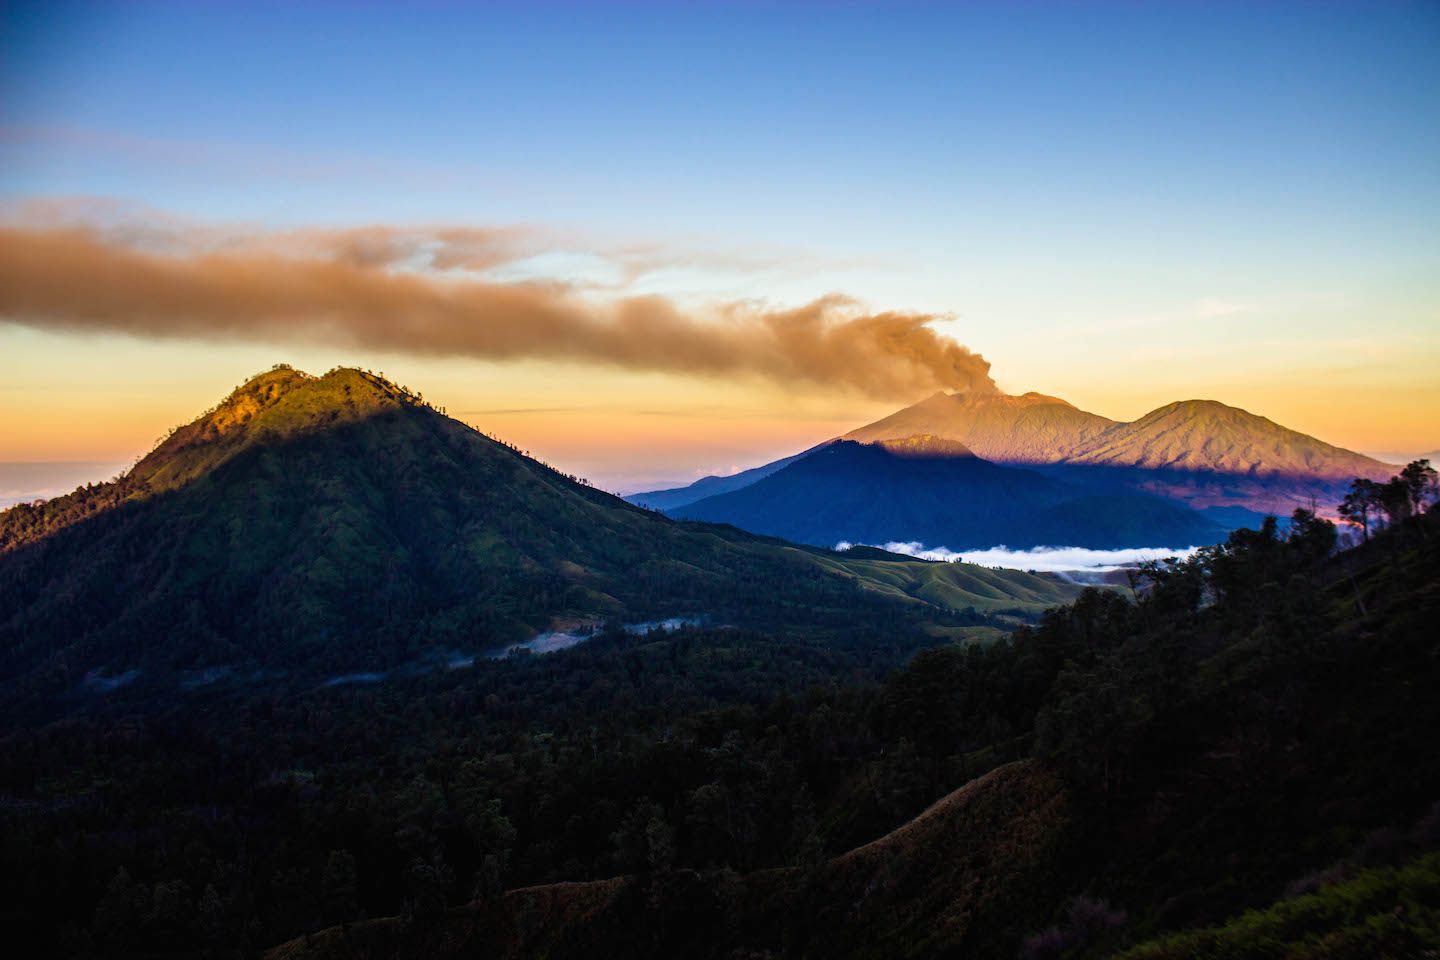 Mt. Raung erupting, Indonesia